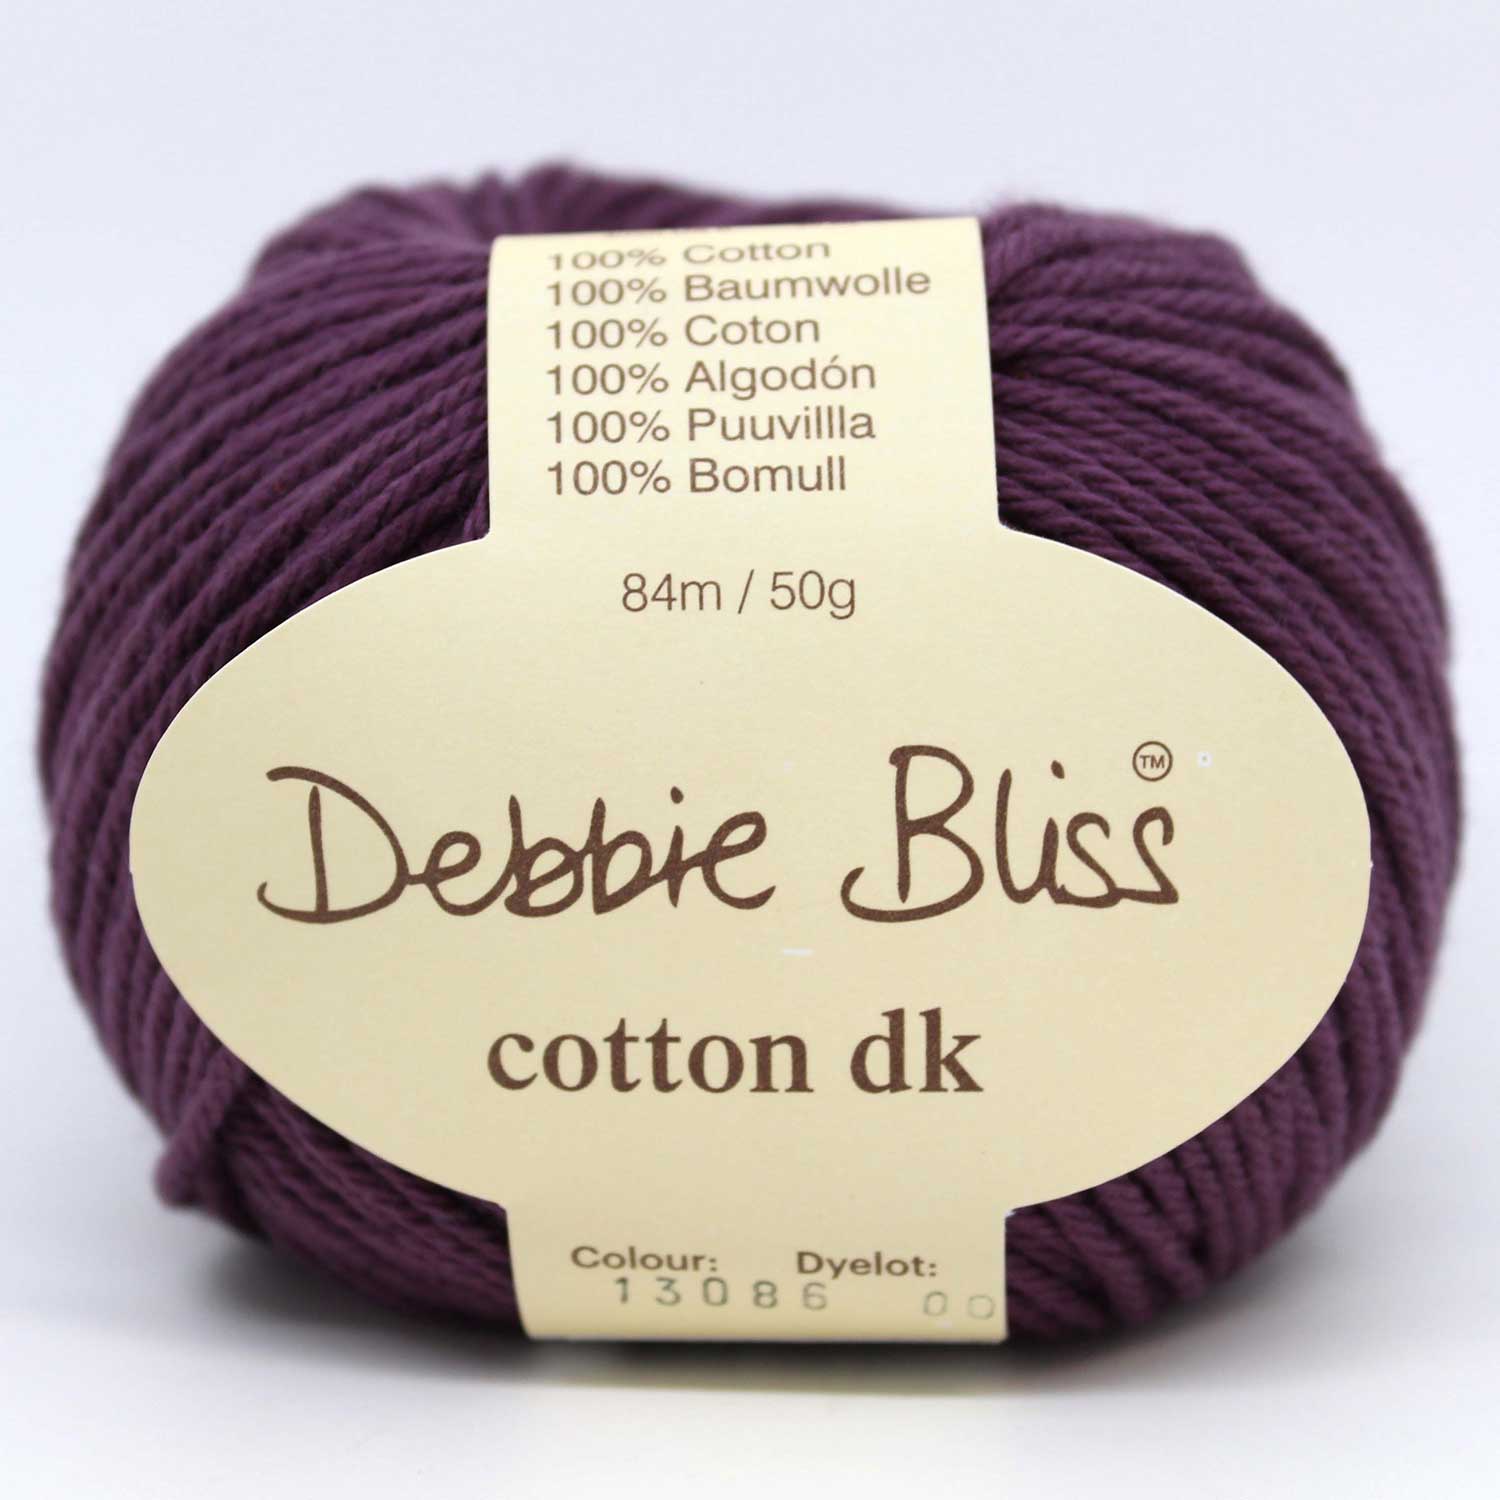 Debbie Bliss Cotton DK - Brian's Best Wools